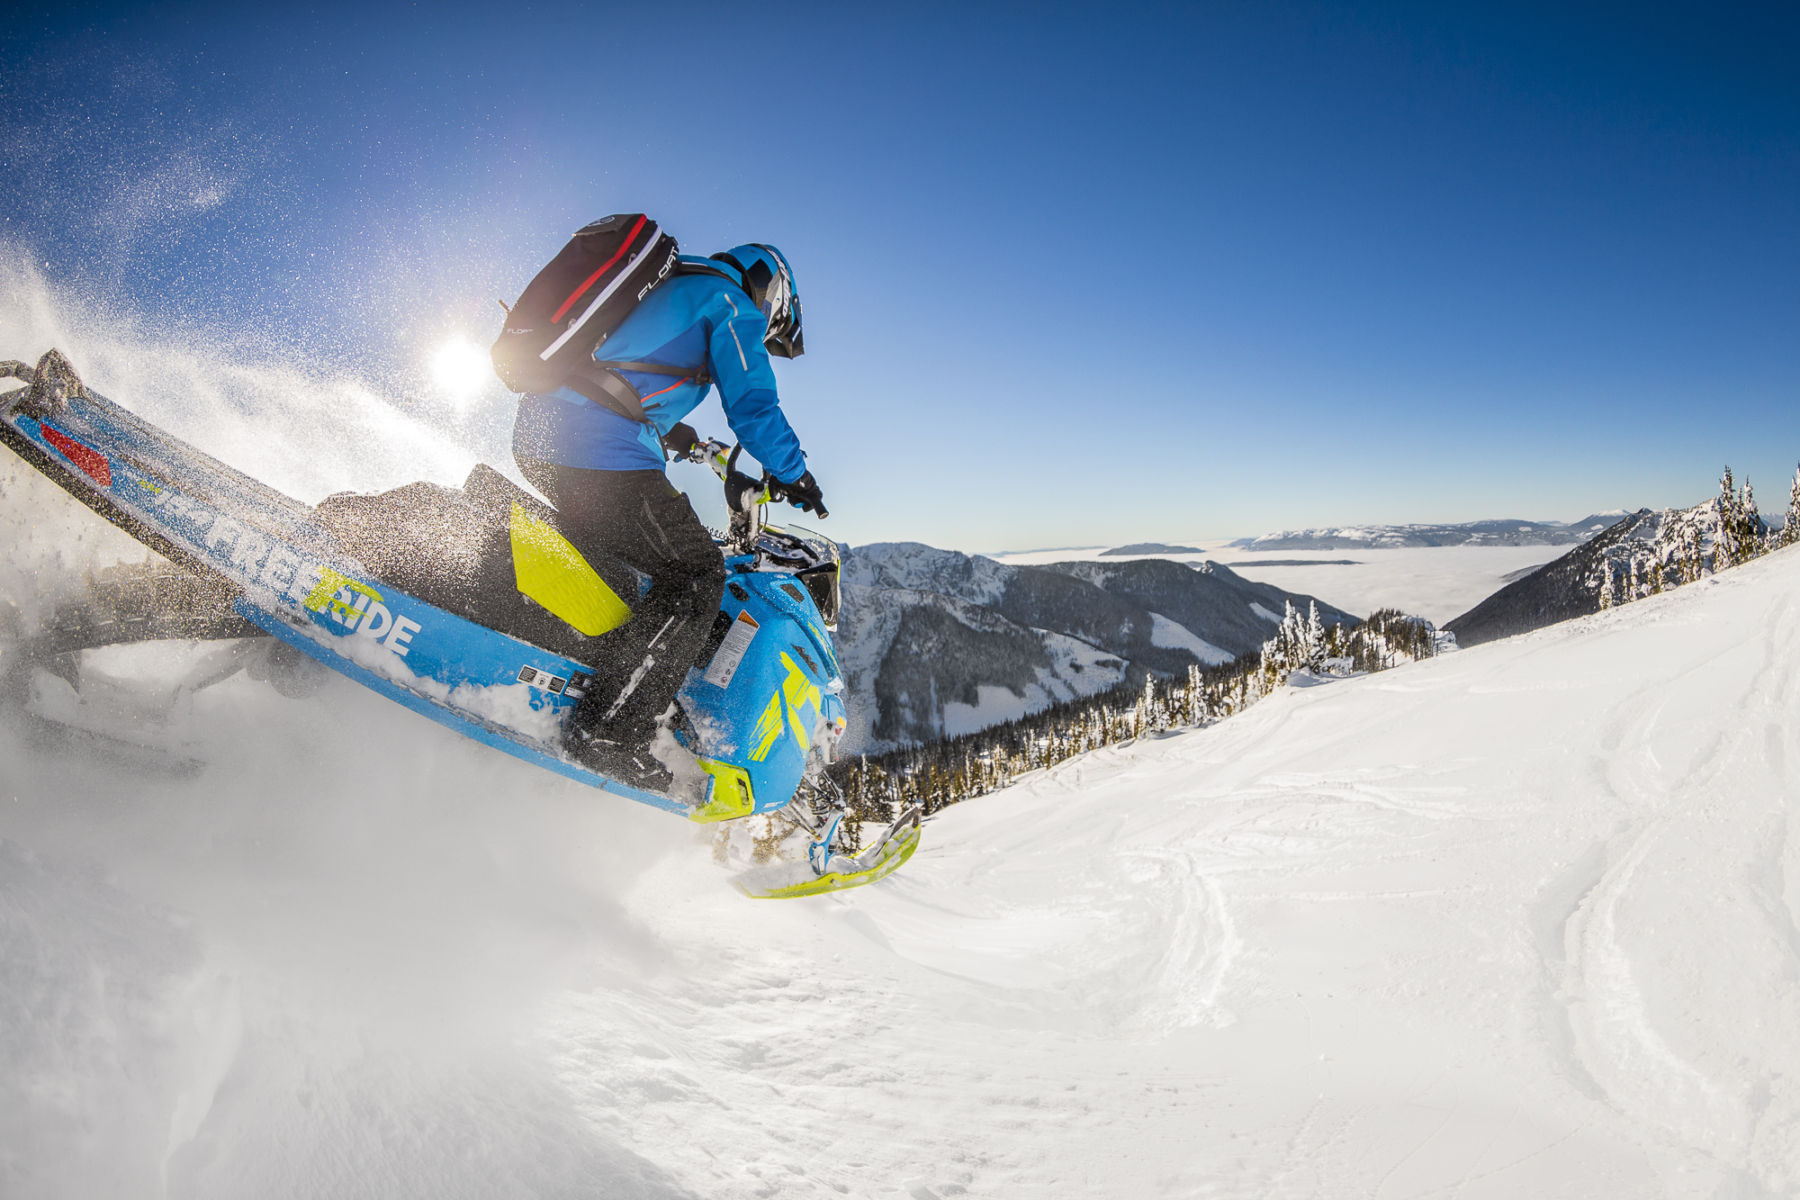 Ski-doo Freeride - Snow - HD Wallpaper 